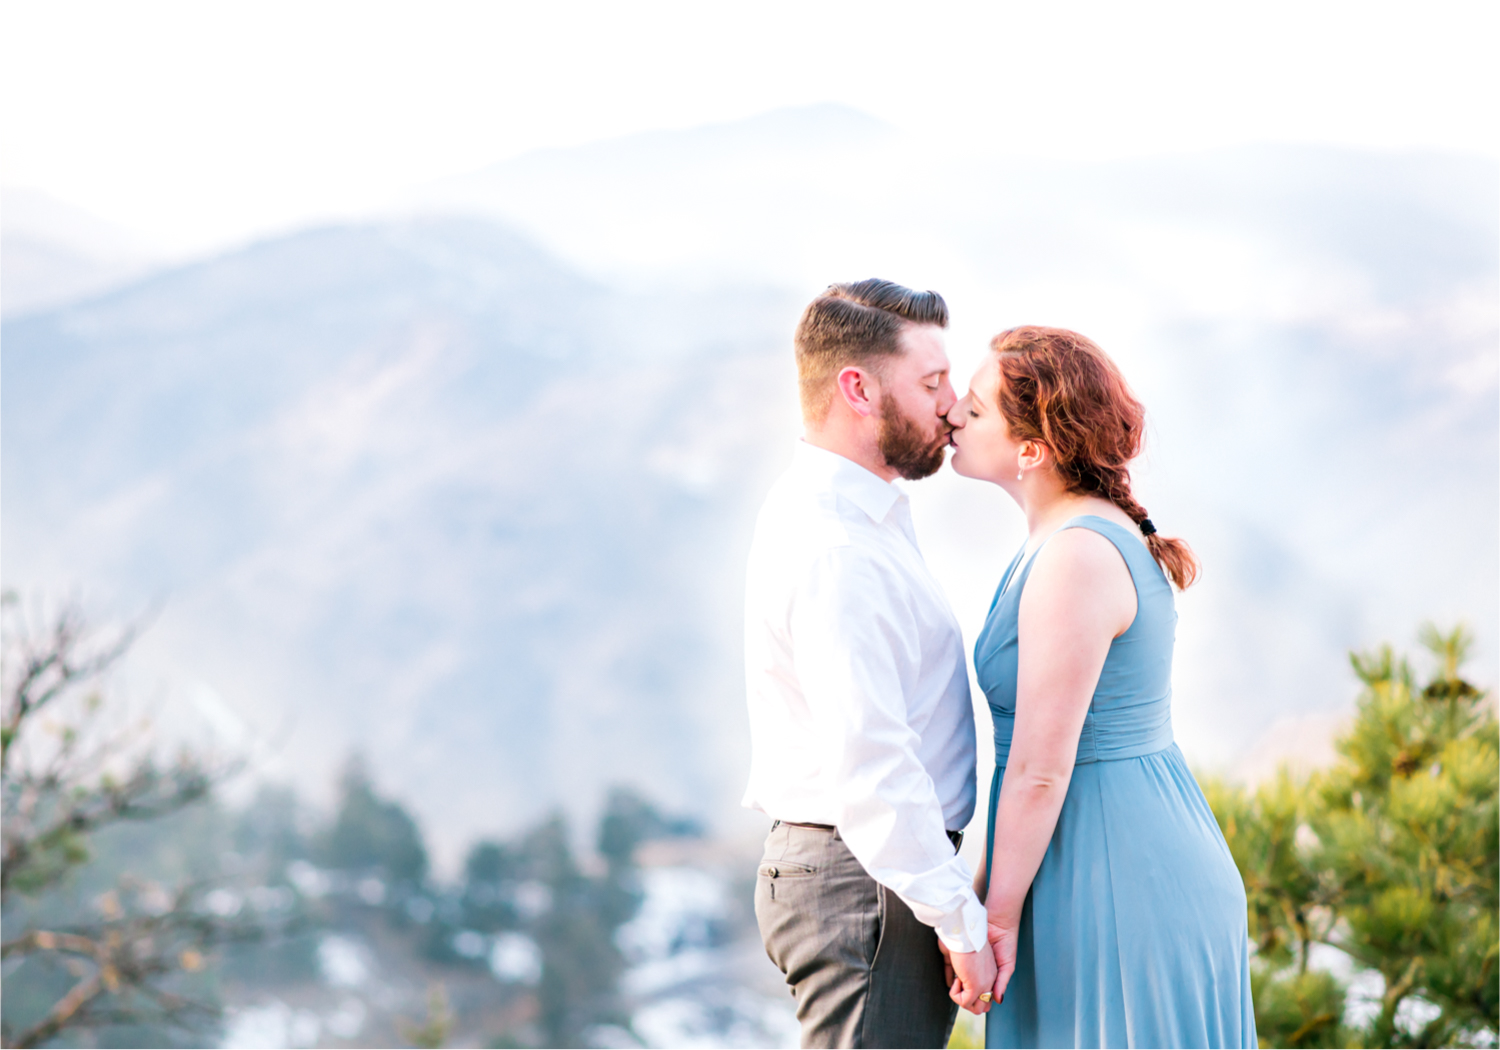 Winter Engagement on Lookout Mountain in Golden Colorado | Britni Girard Photography - Colorado Wedding Photography Team